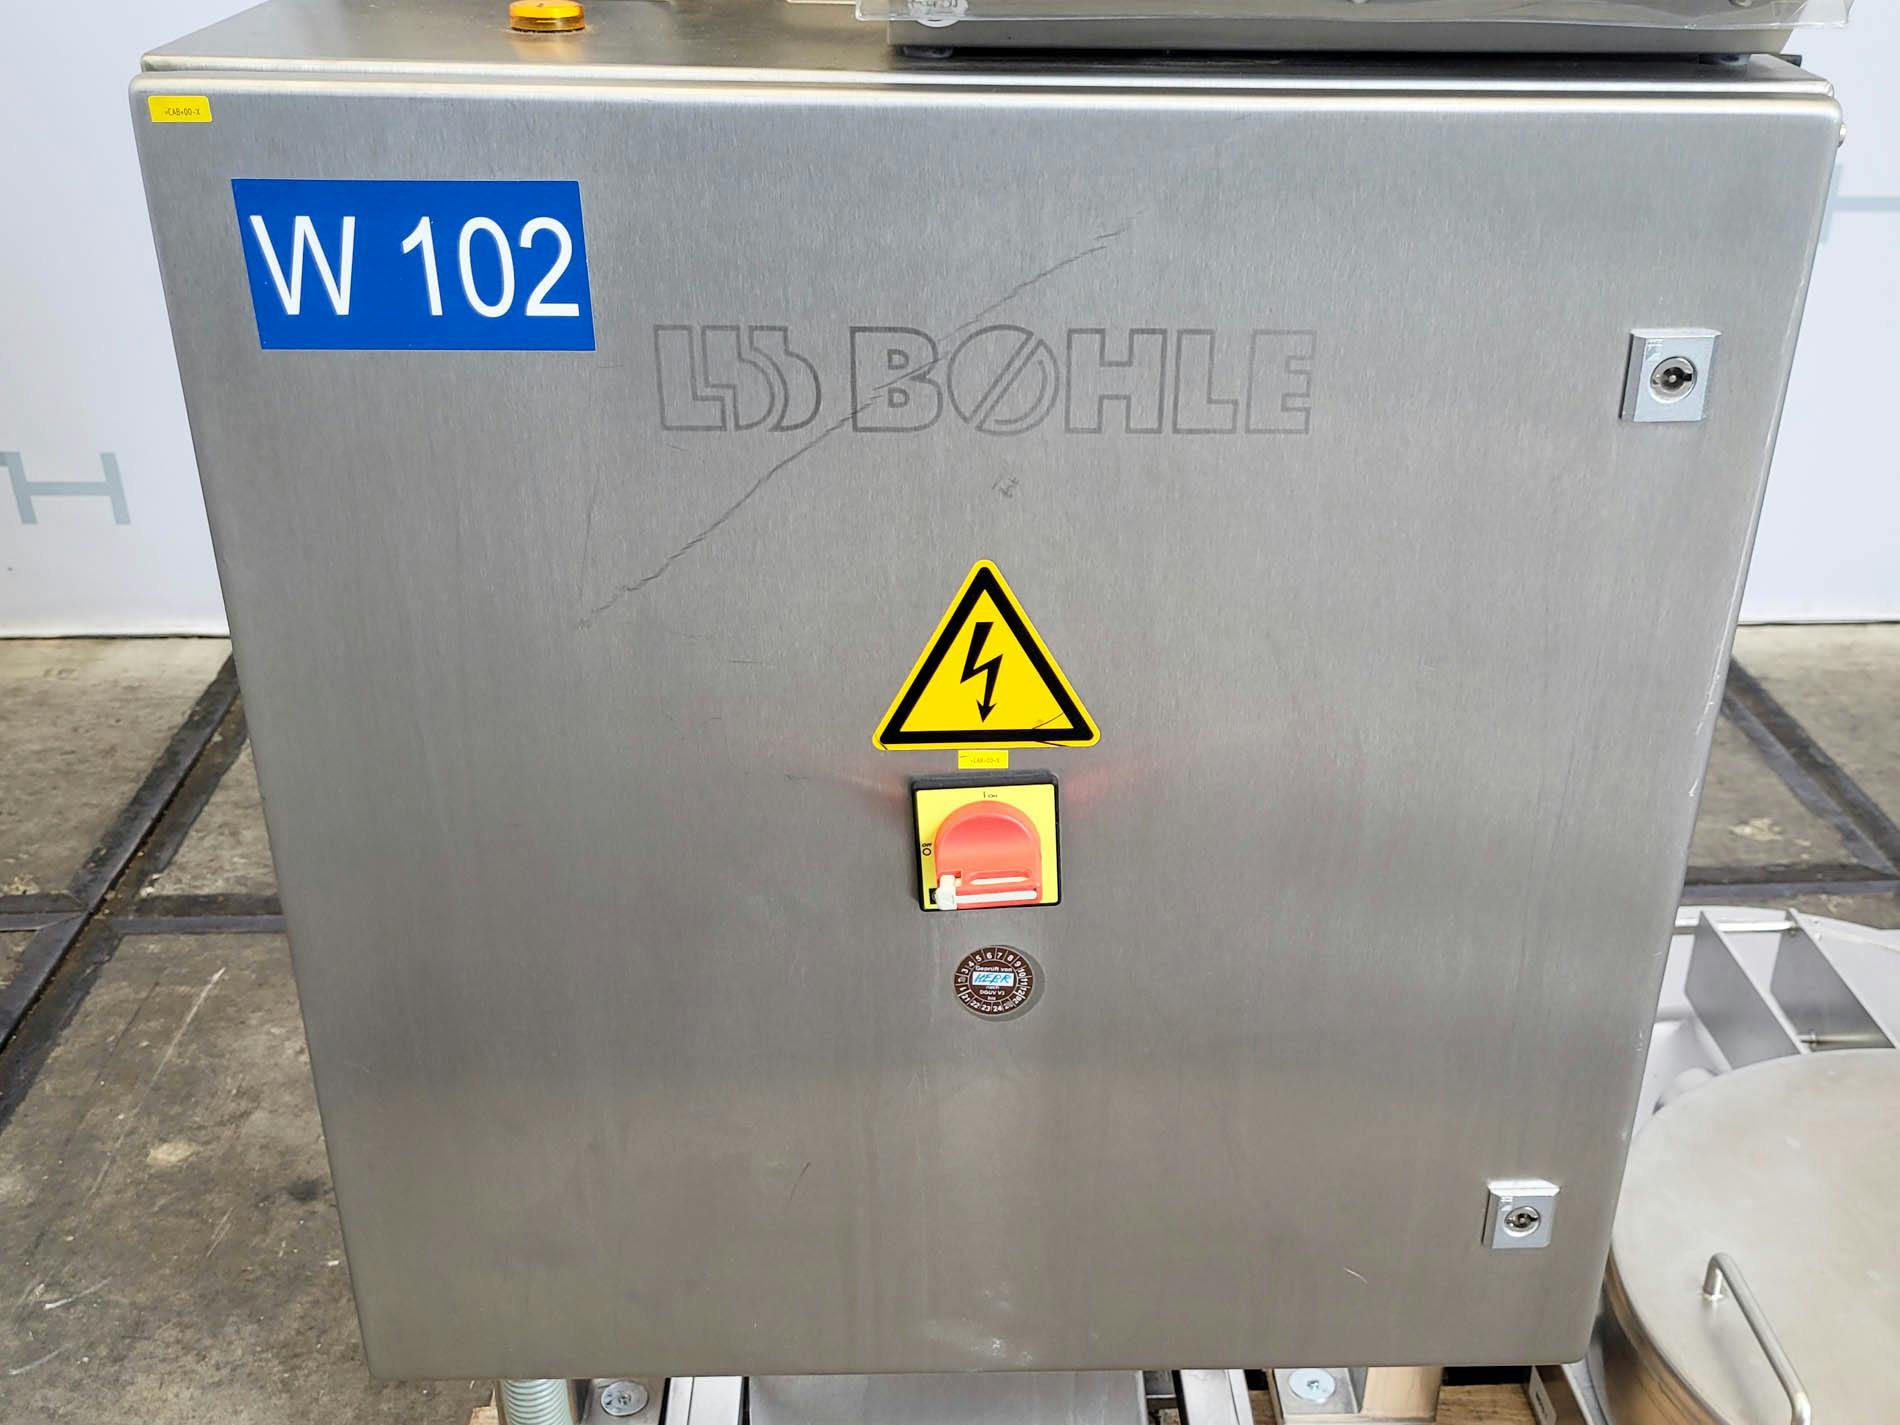 LB Bohle Dosing system - Vibro feeder - image 10